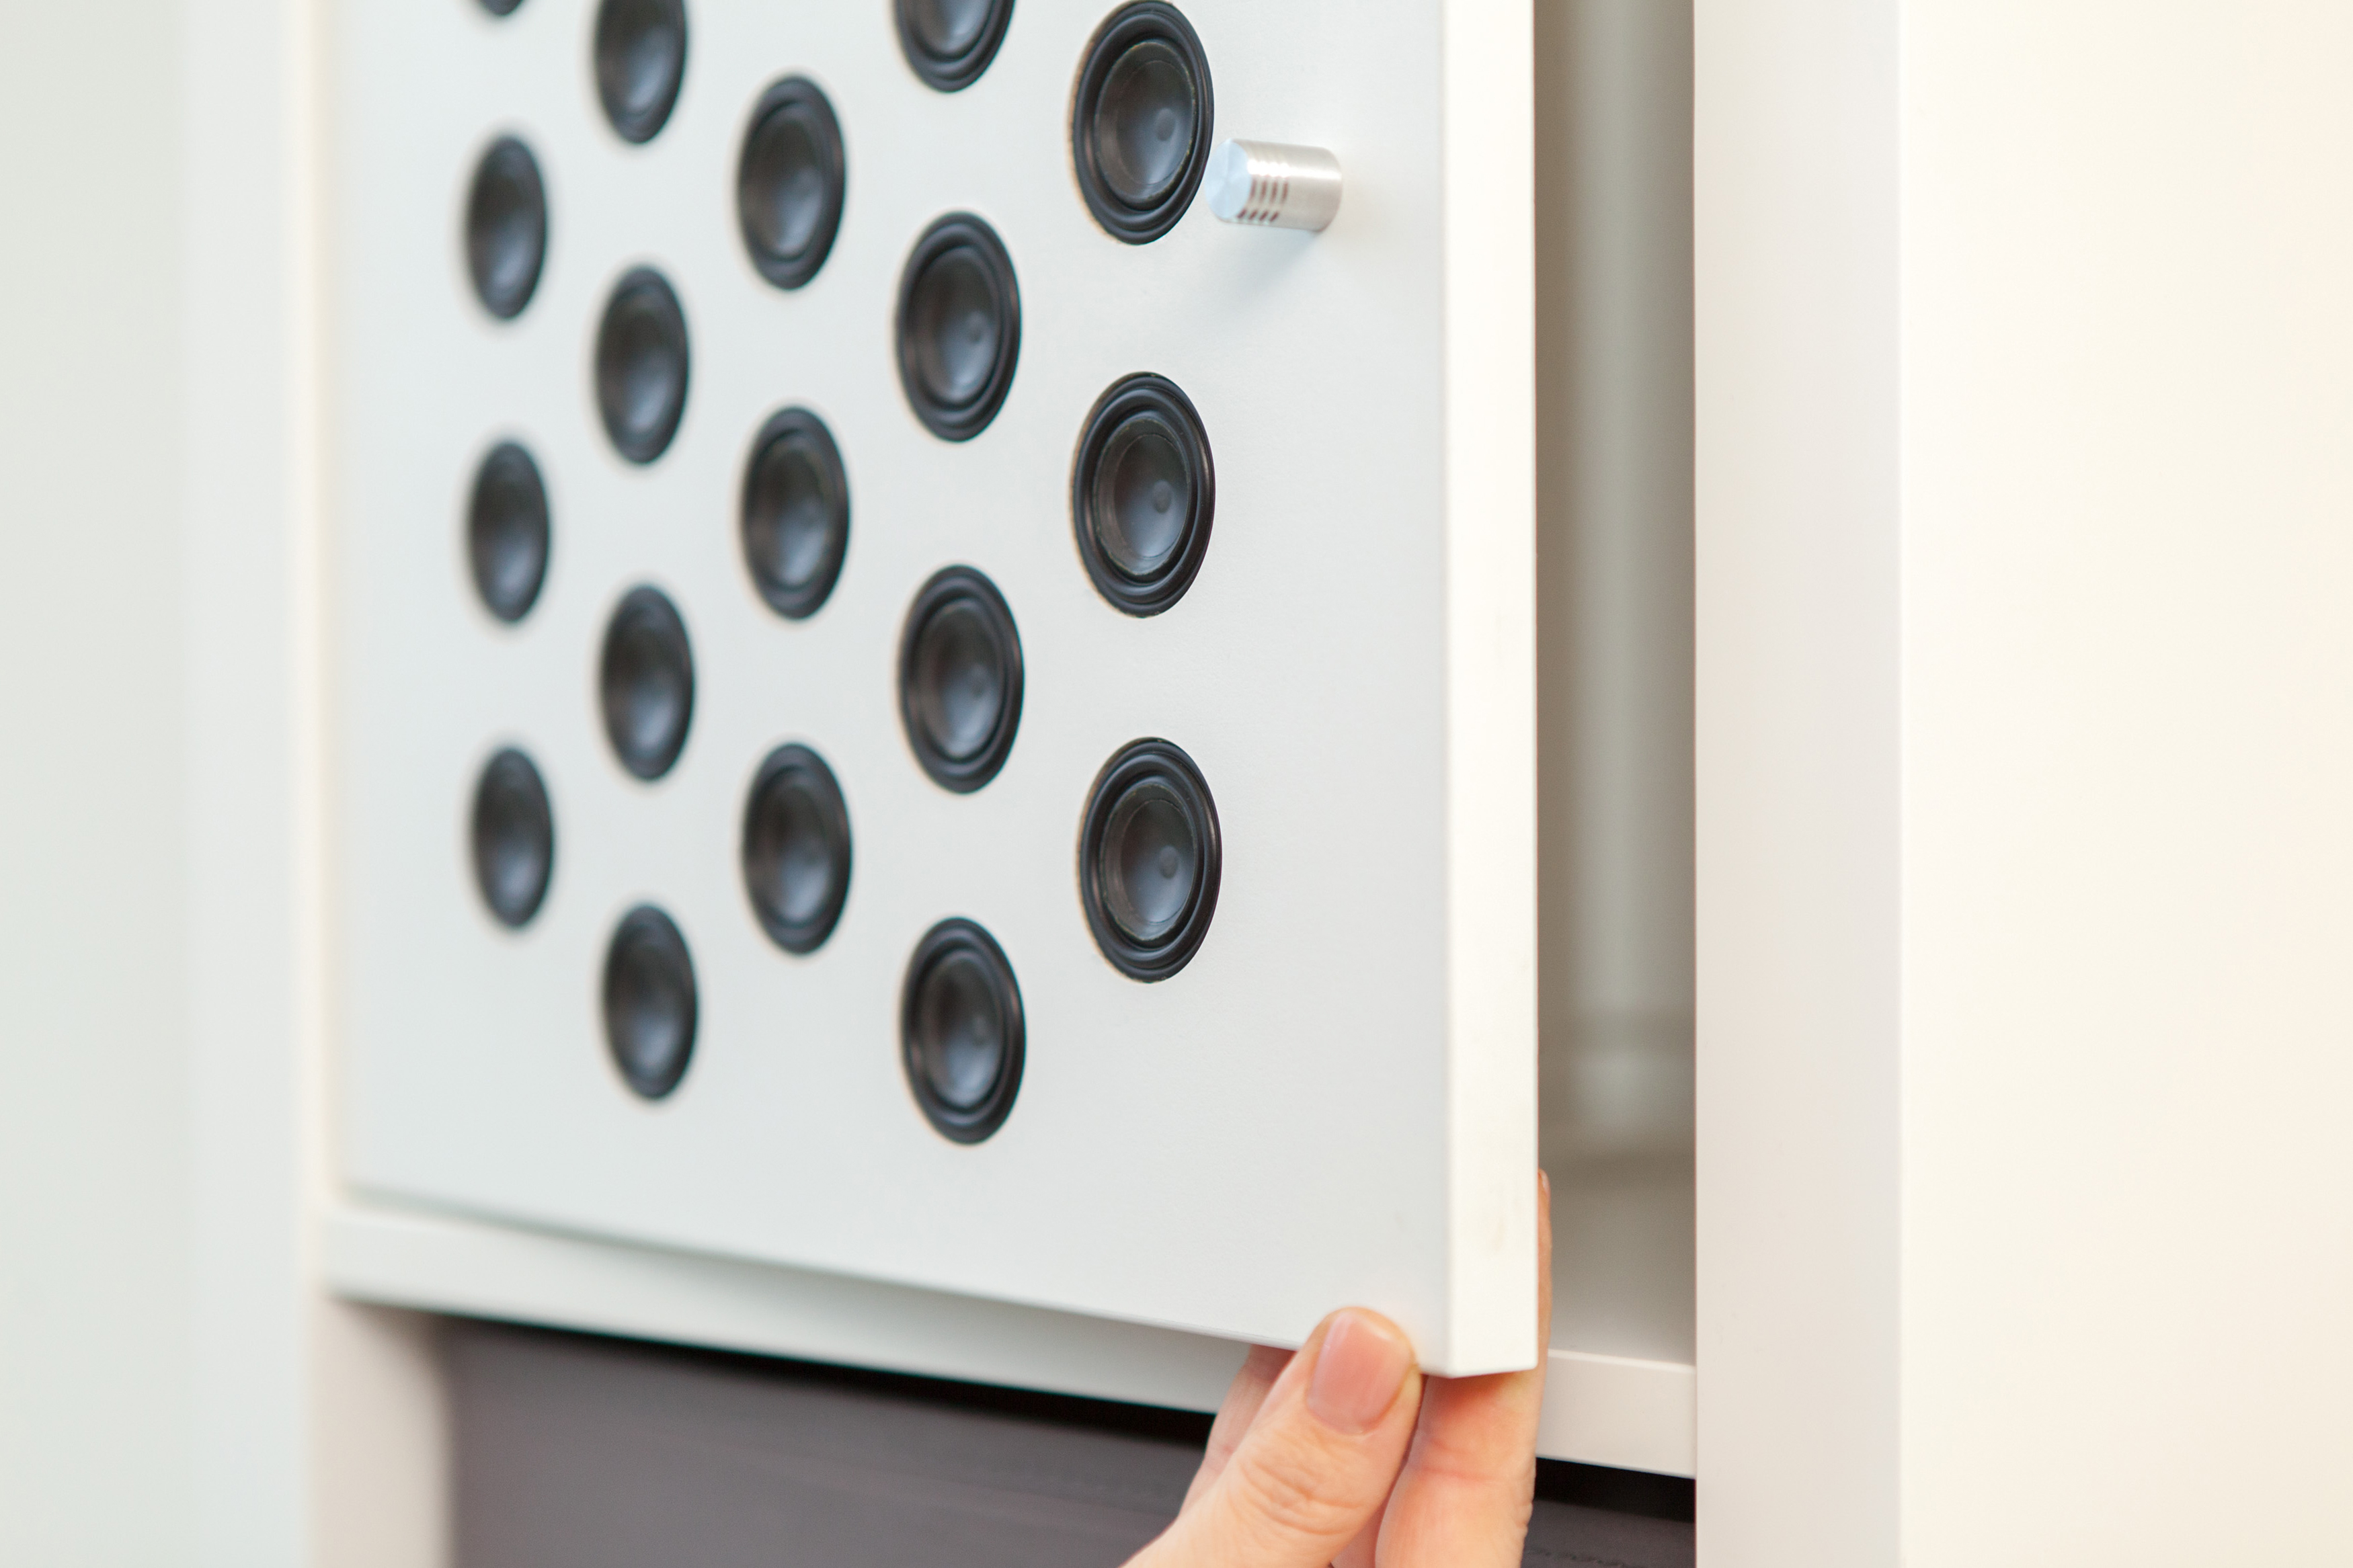 Planar speaker technology installed in a cabinet door.